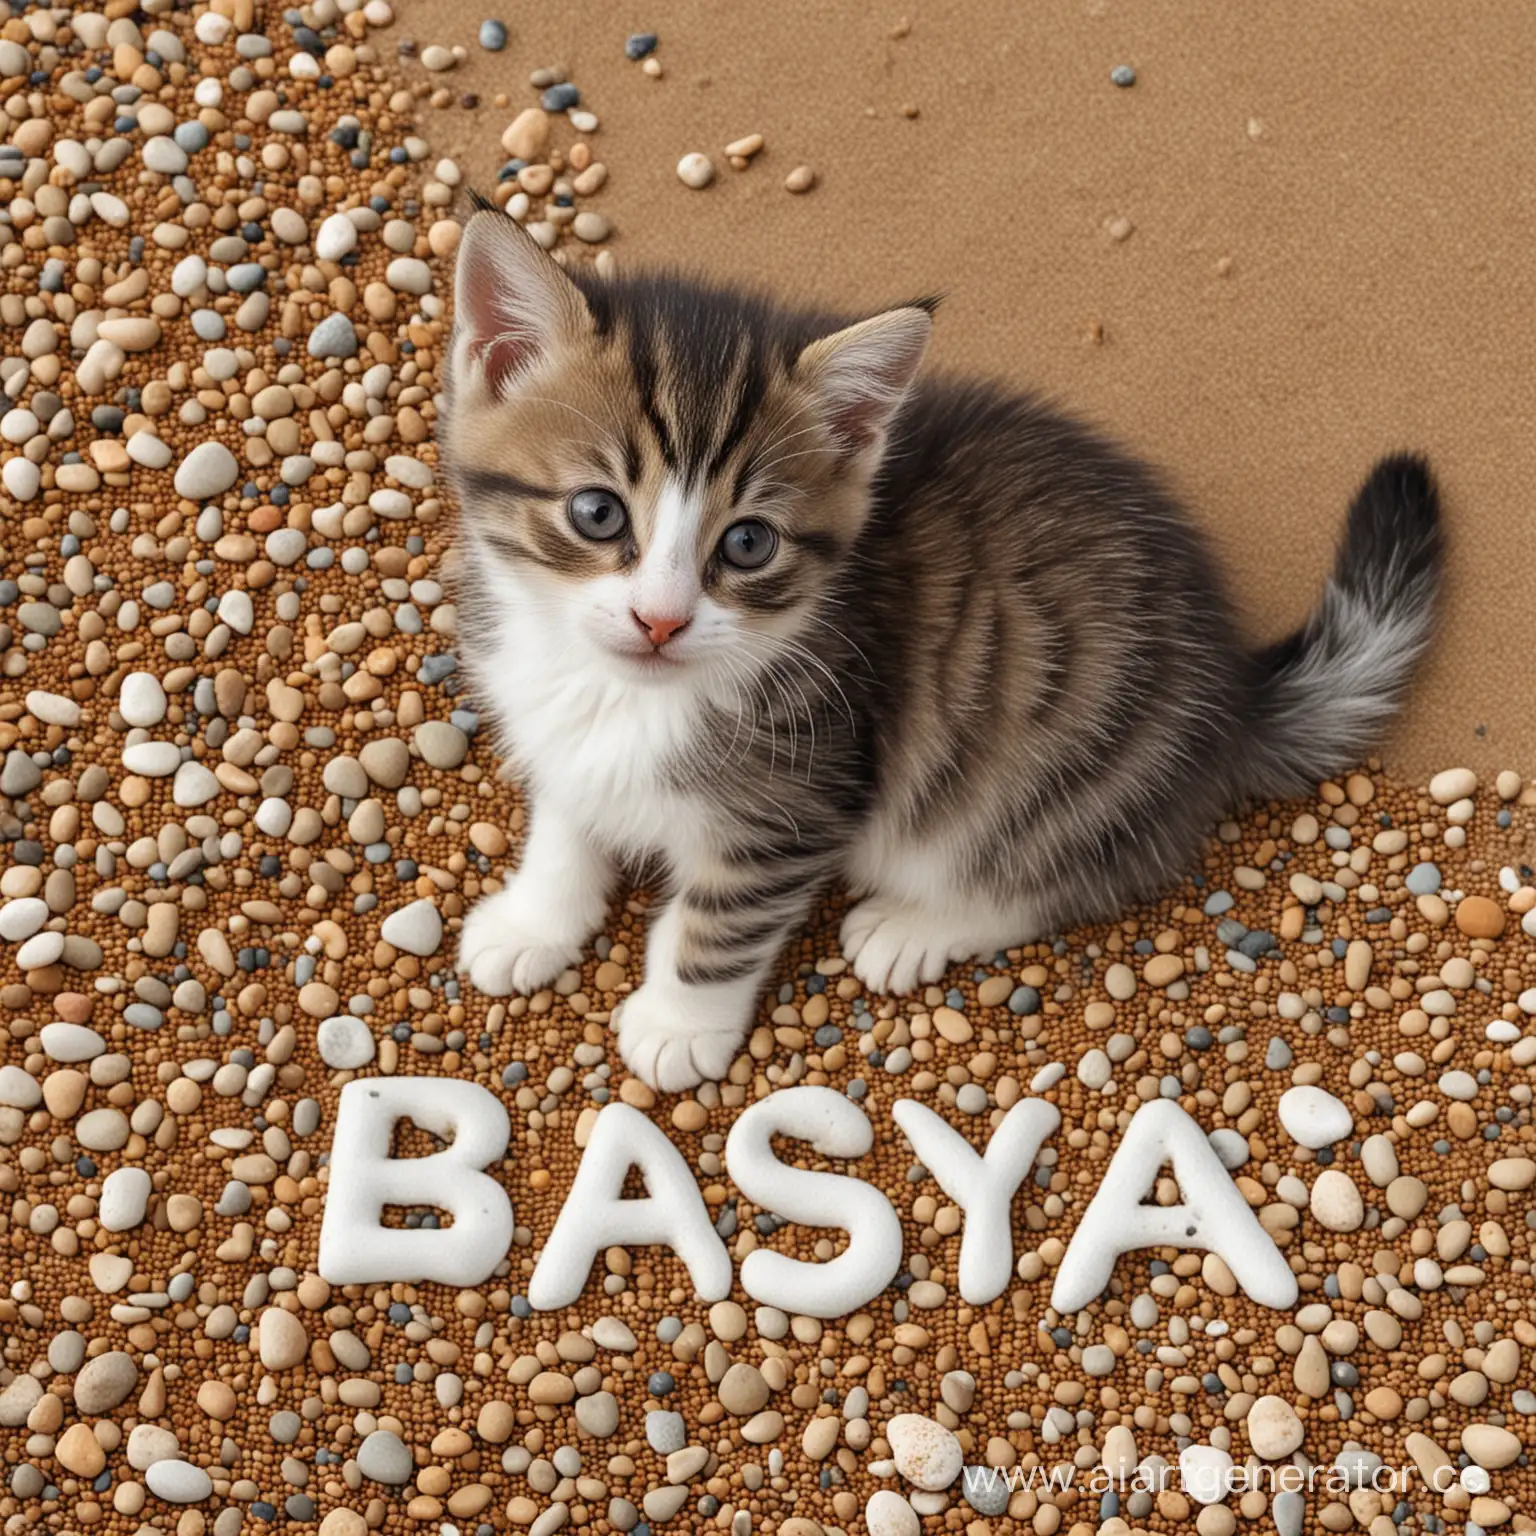 Kitten-Spelling-Basya-with-Pebbles-on-Beach